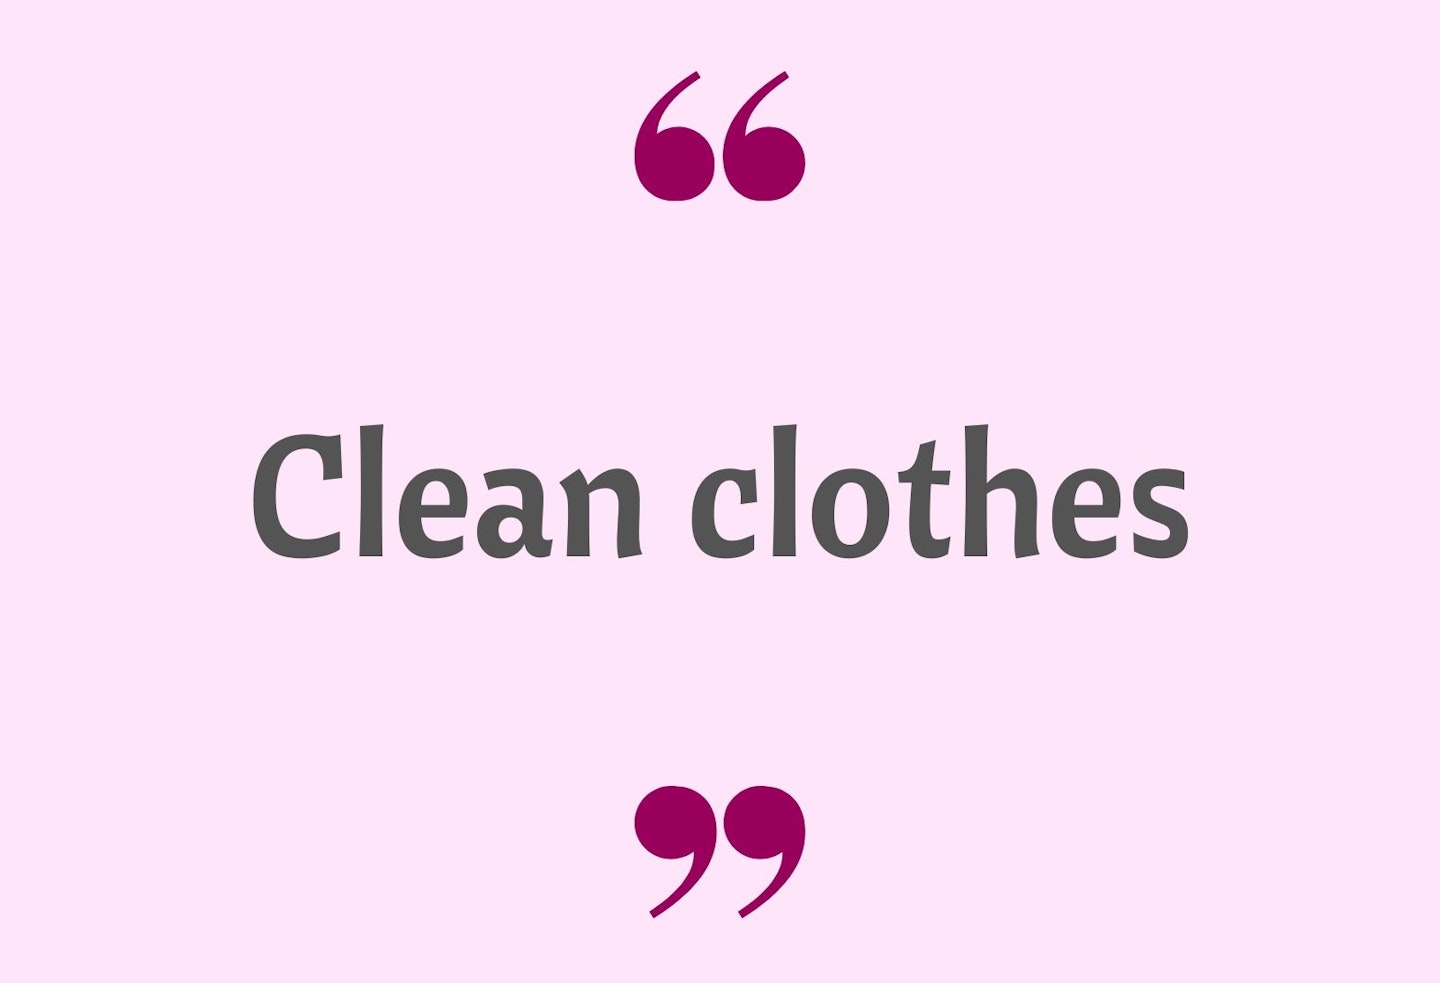 7) Clean clothes